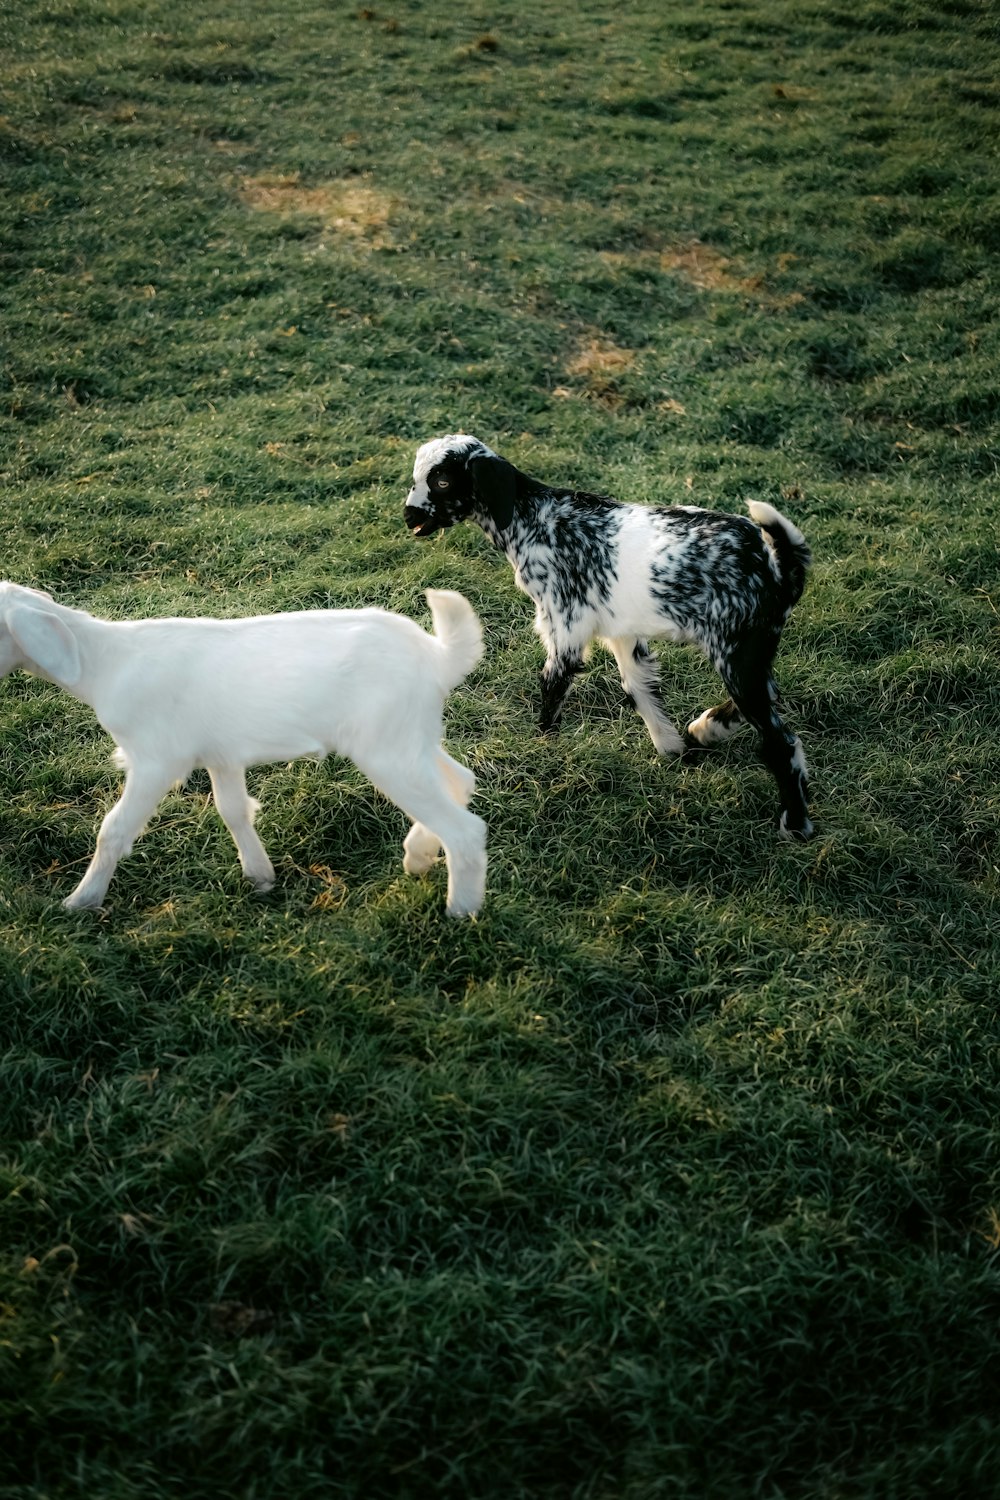 a couple of goats walking across a lush green field